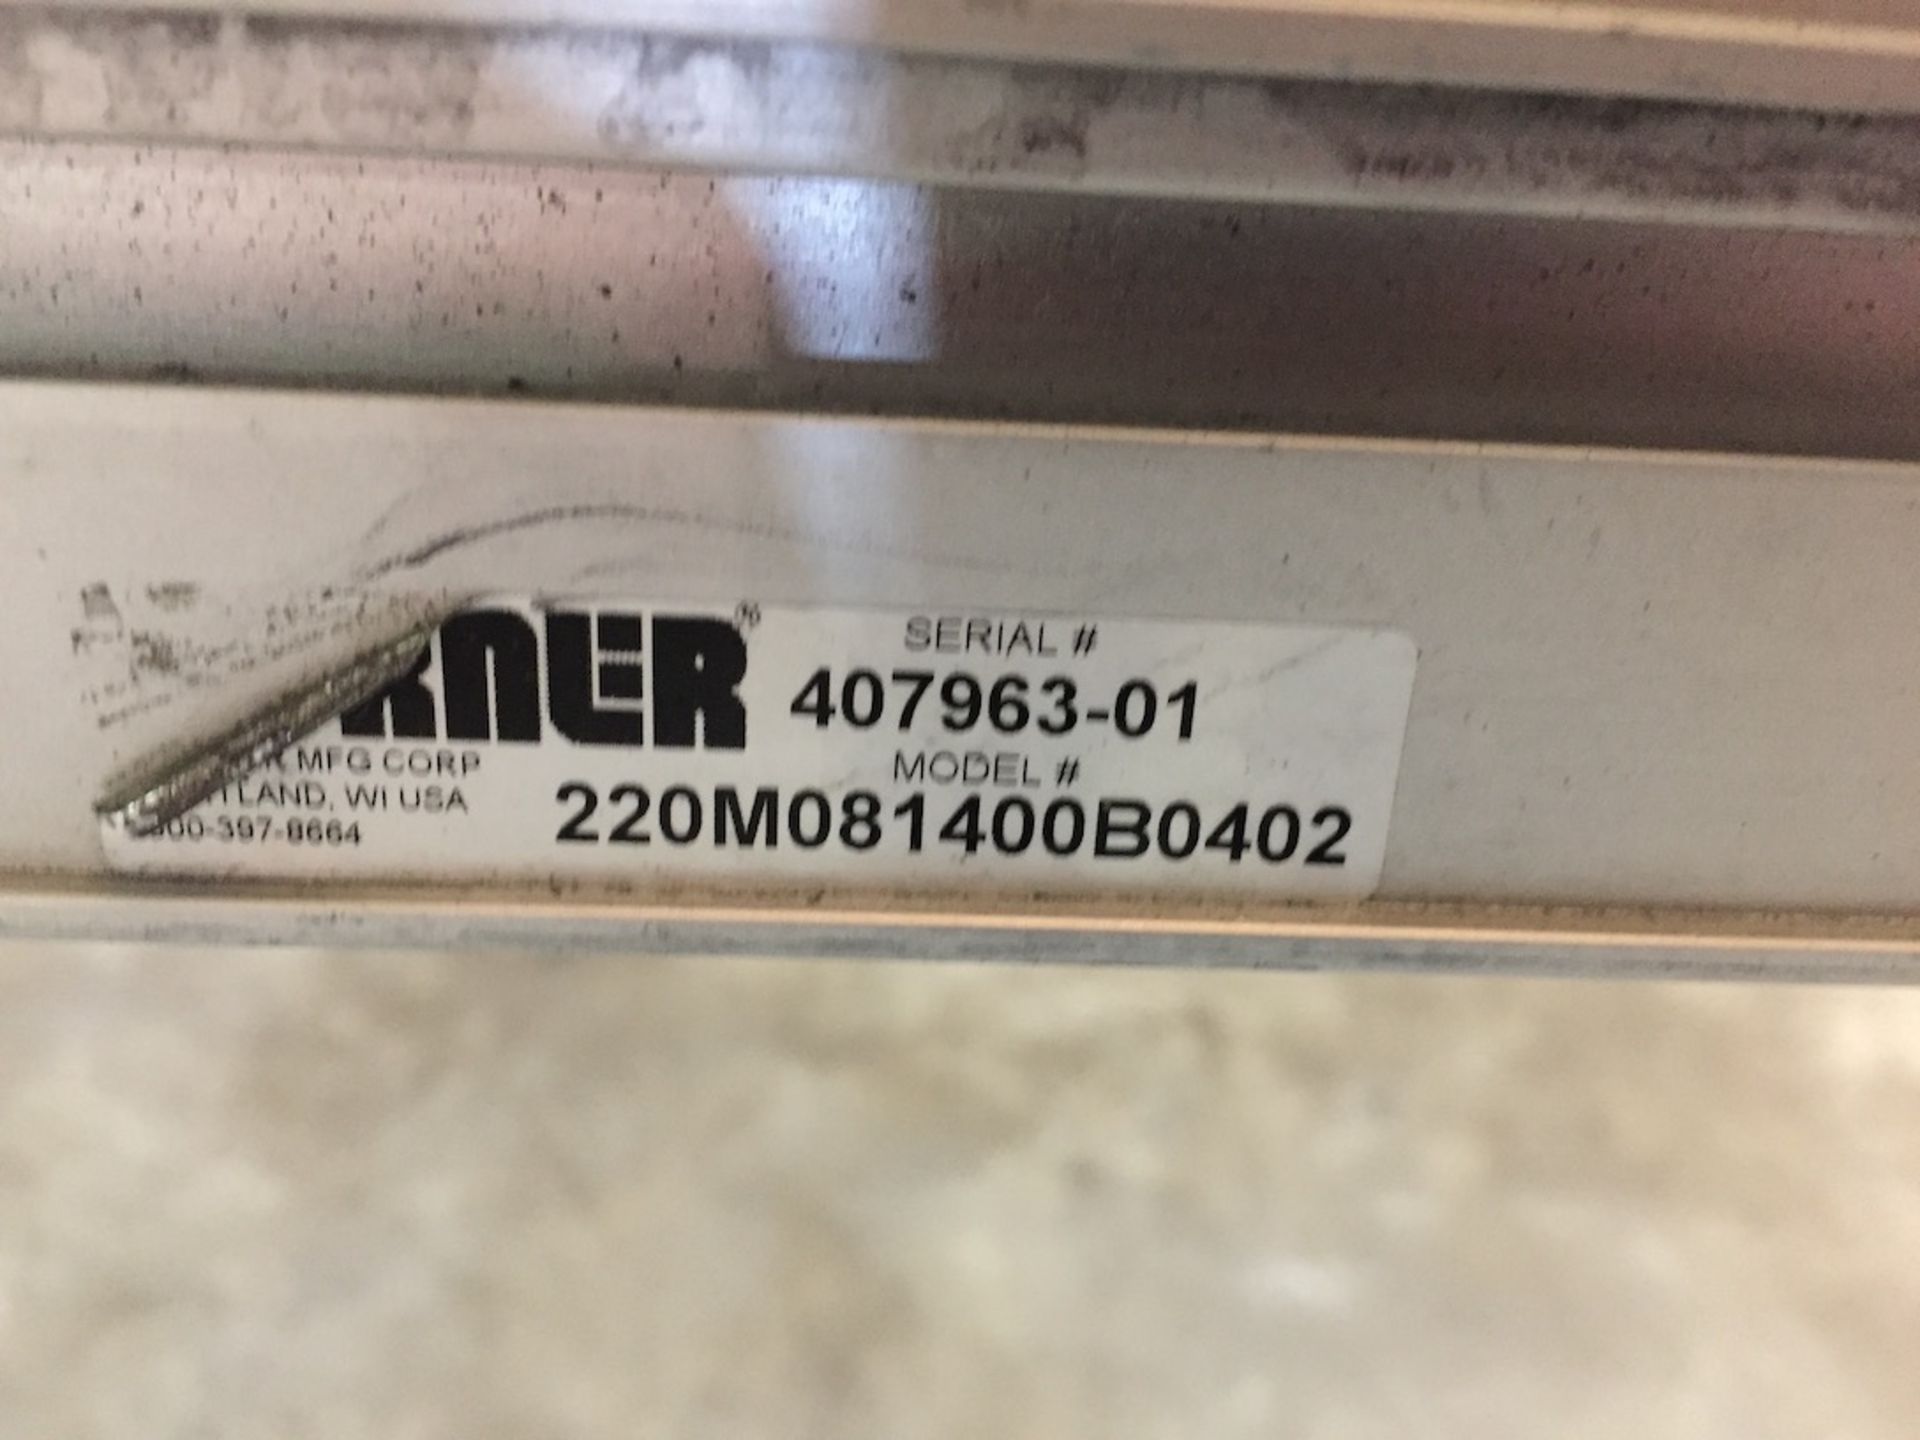 Dorner 2200 Series 14' Conveyor - Image 2 of 3